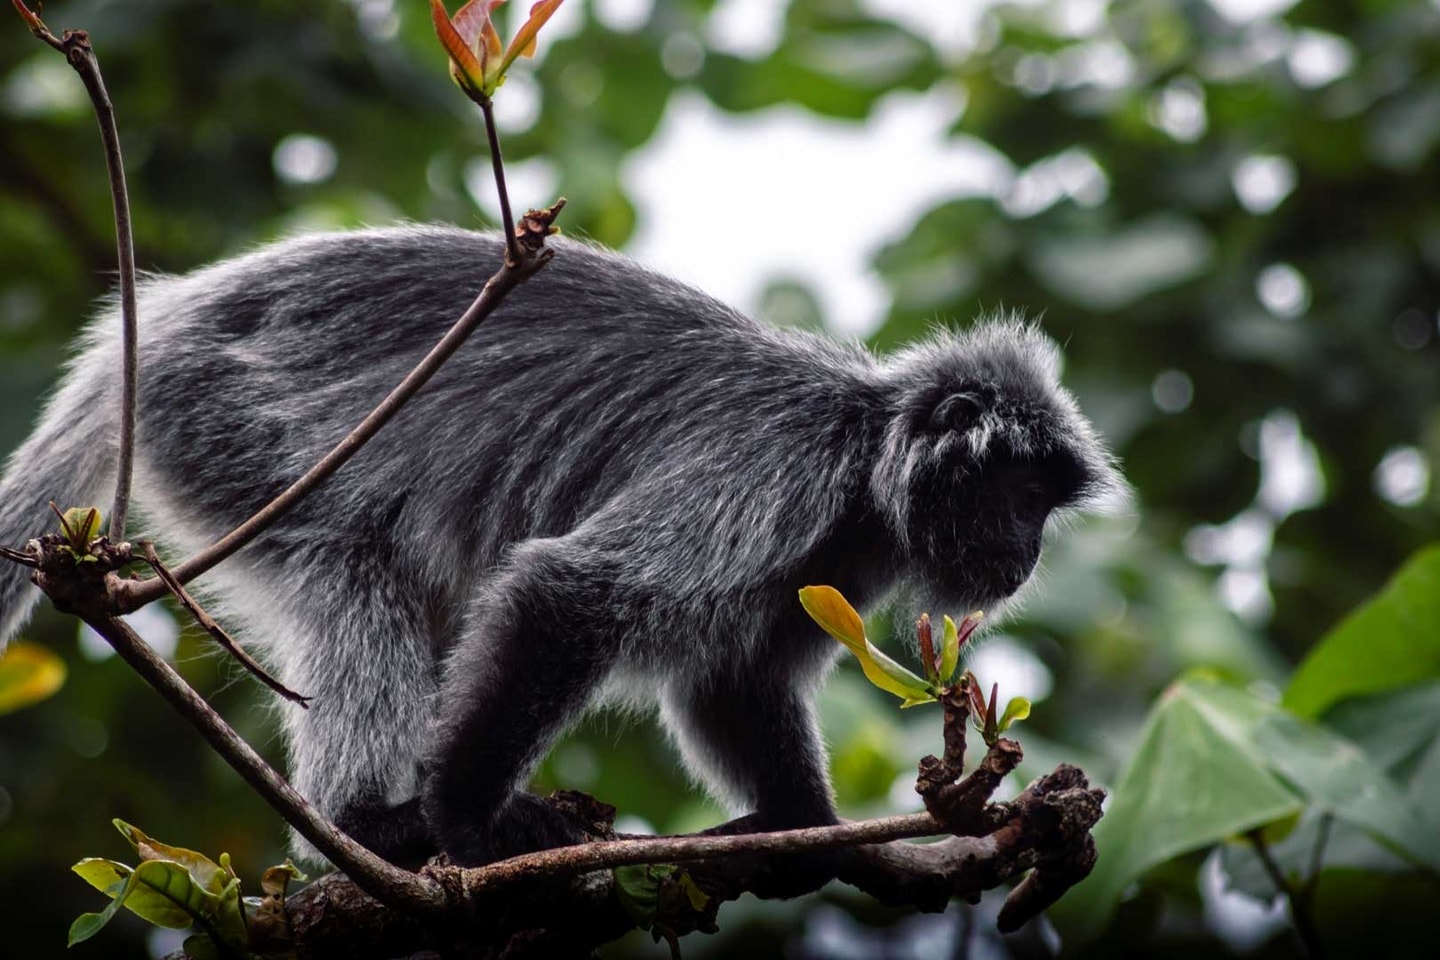 Silver Leaf Monkey in Borneo